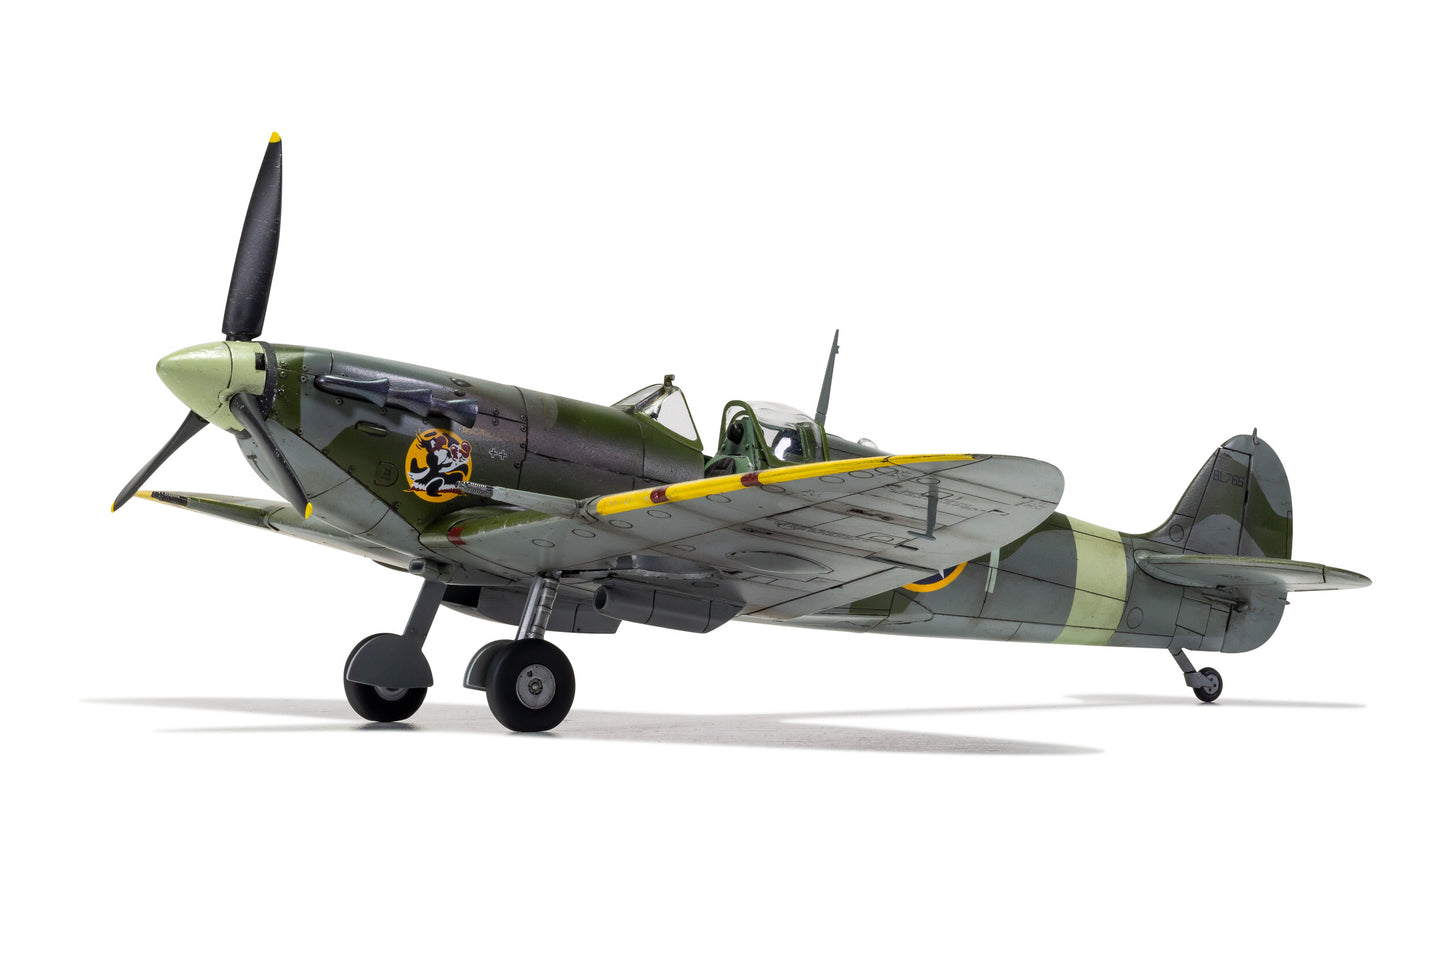 Airfix 1/48th scale Supermarine Spitfire Mk.Vb